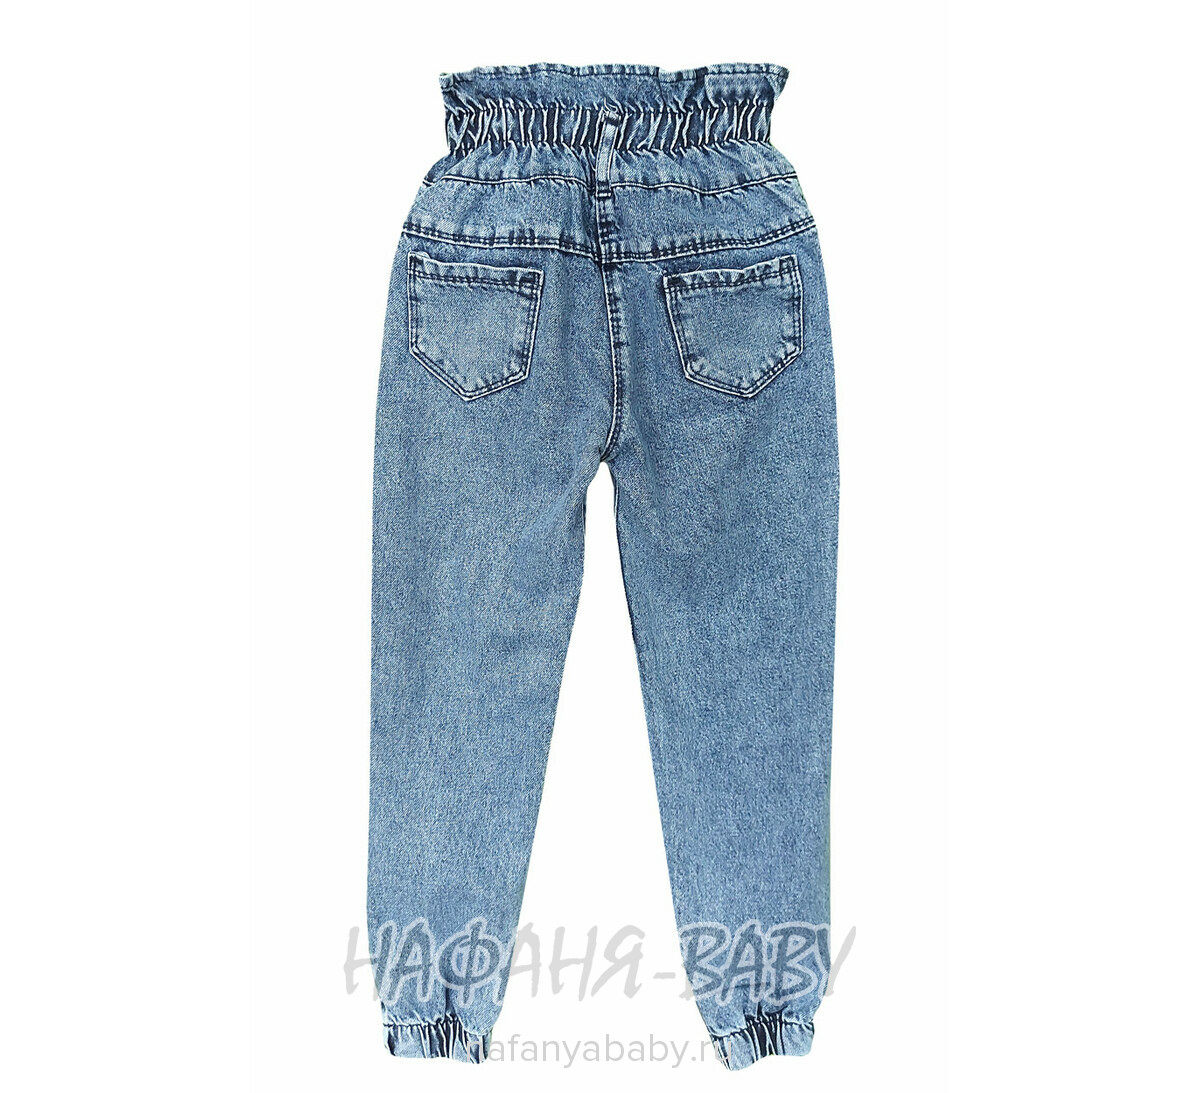 Джинсы YAVRUCAK Jeans арт: 8204 для девочки 8-12 лет, цвет синий, оптом Турция